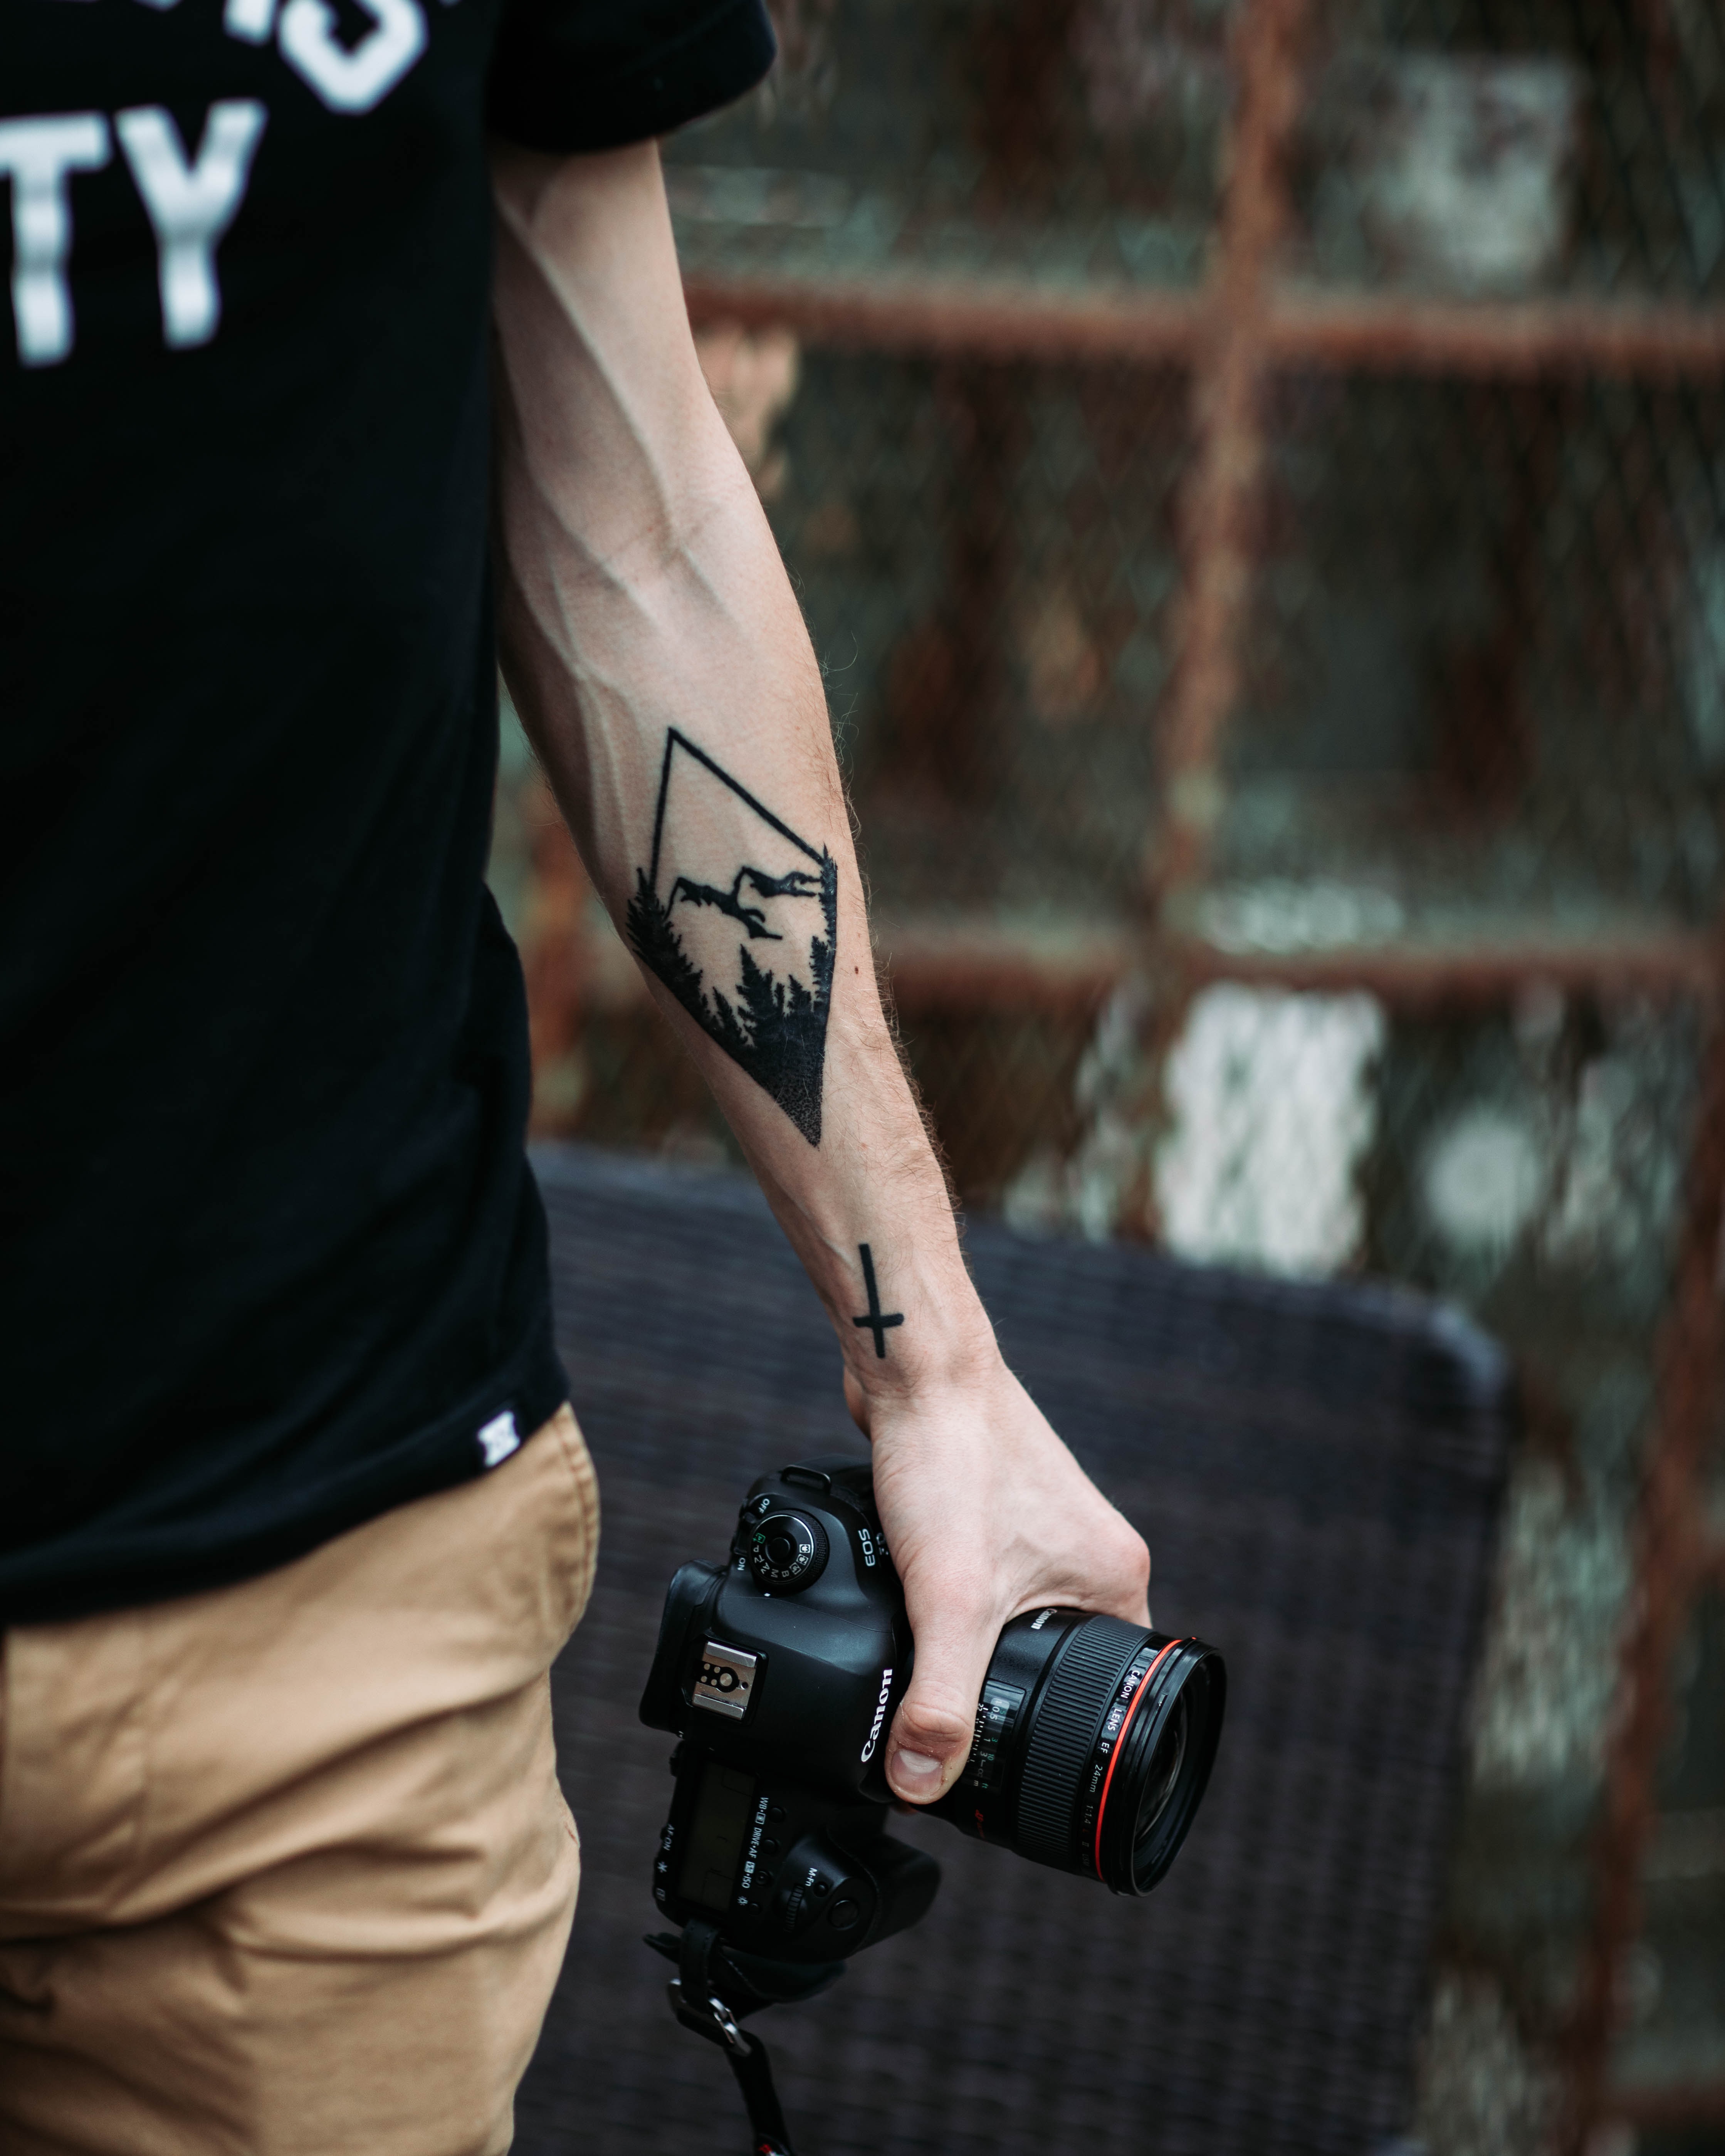 tattoo, photographer, technologies, tattoos, hand, technology, camera